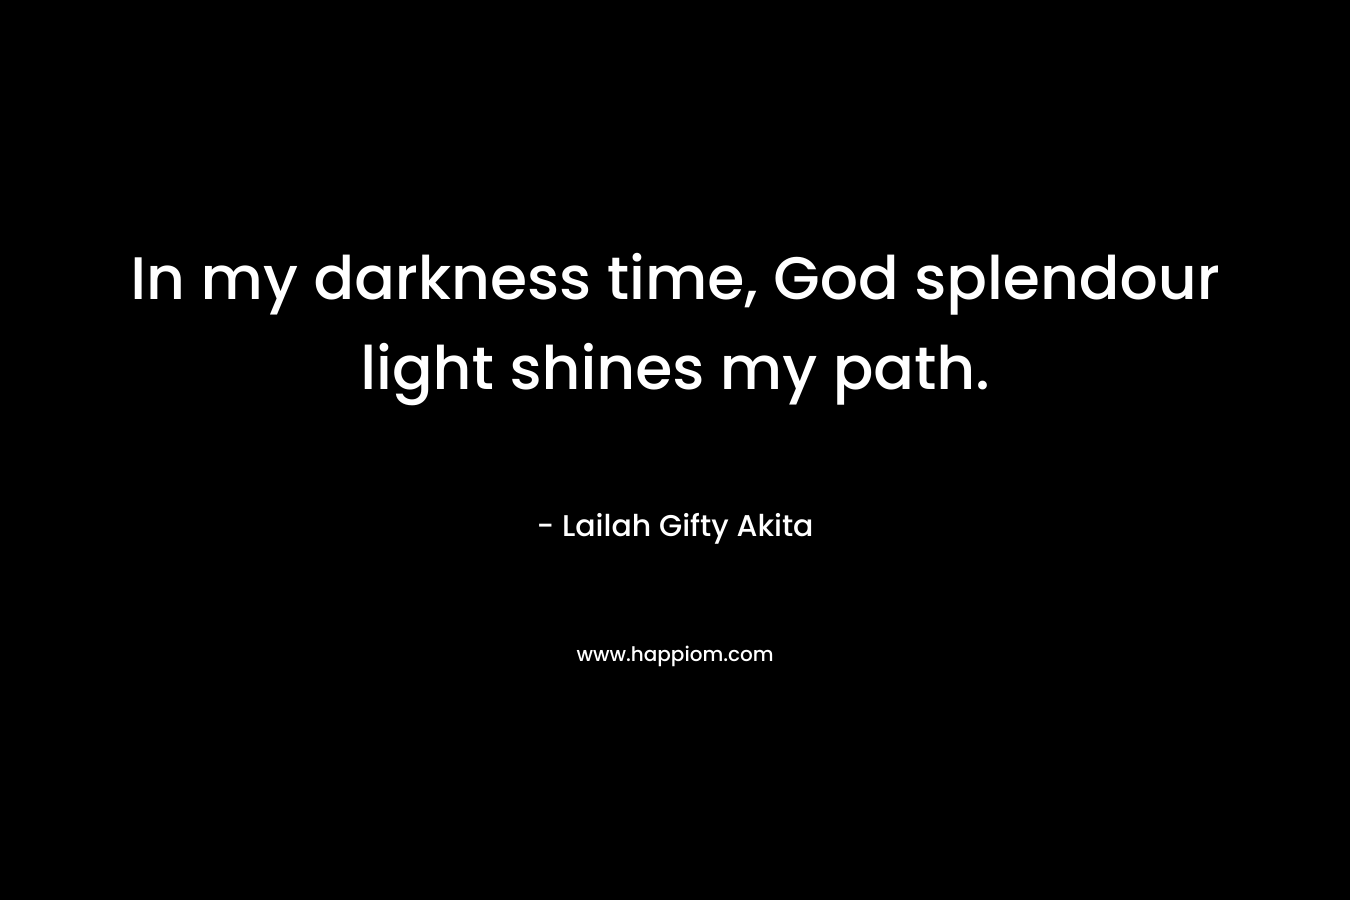 In my darkness time, God splendour light shines my path.